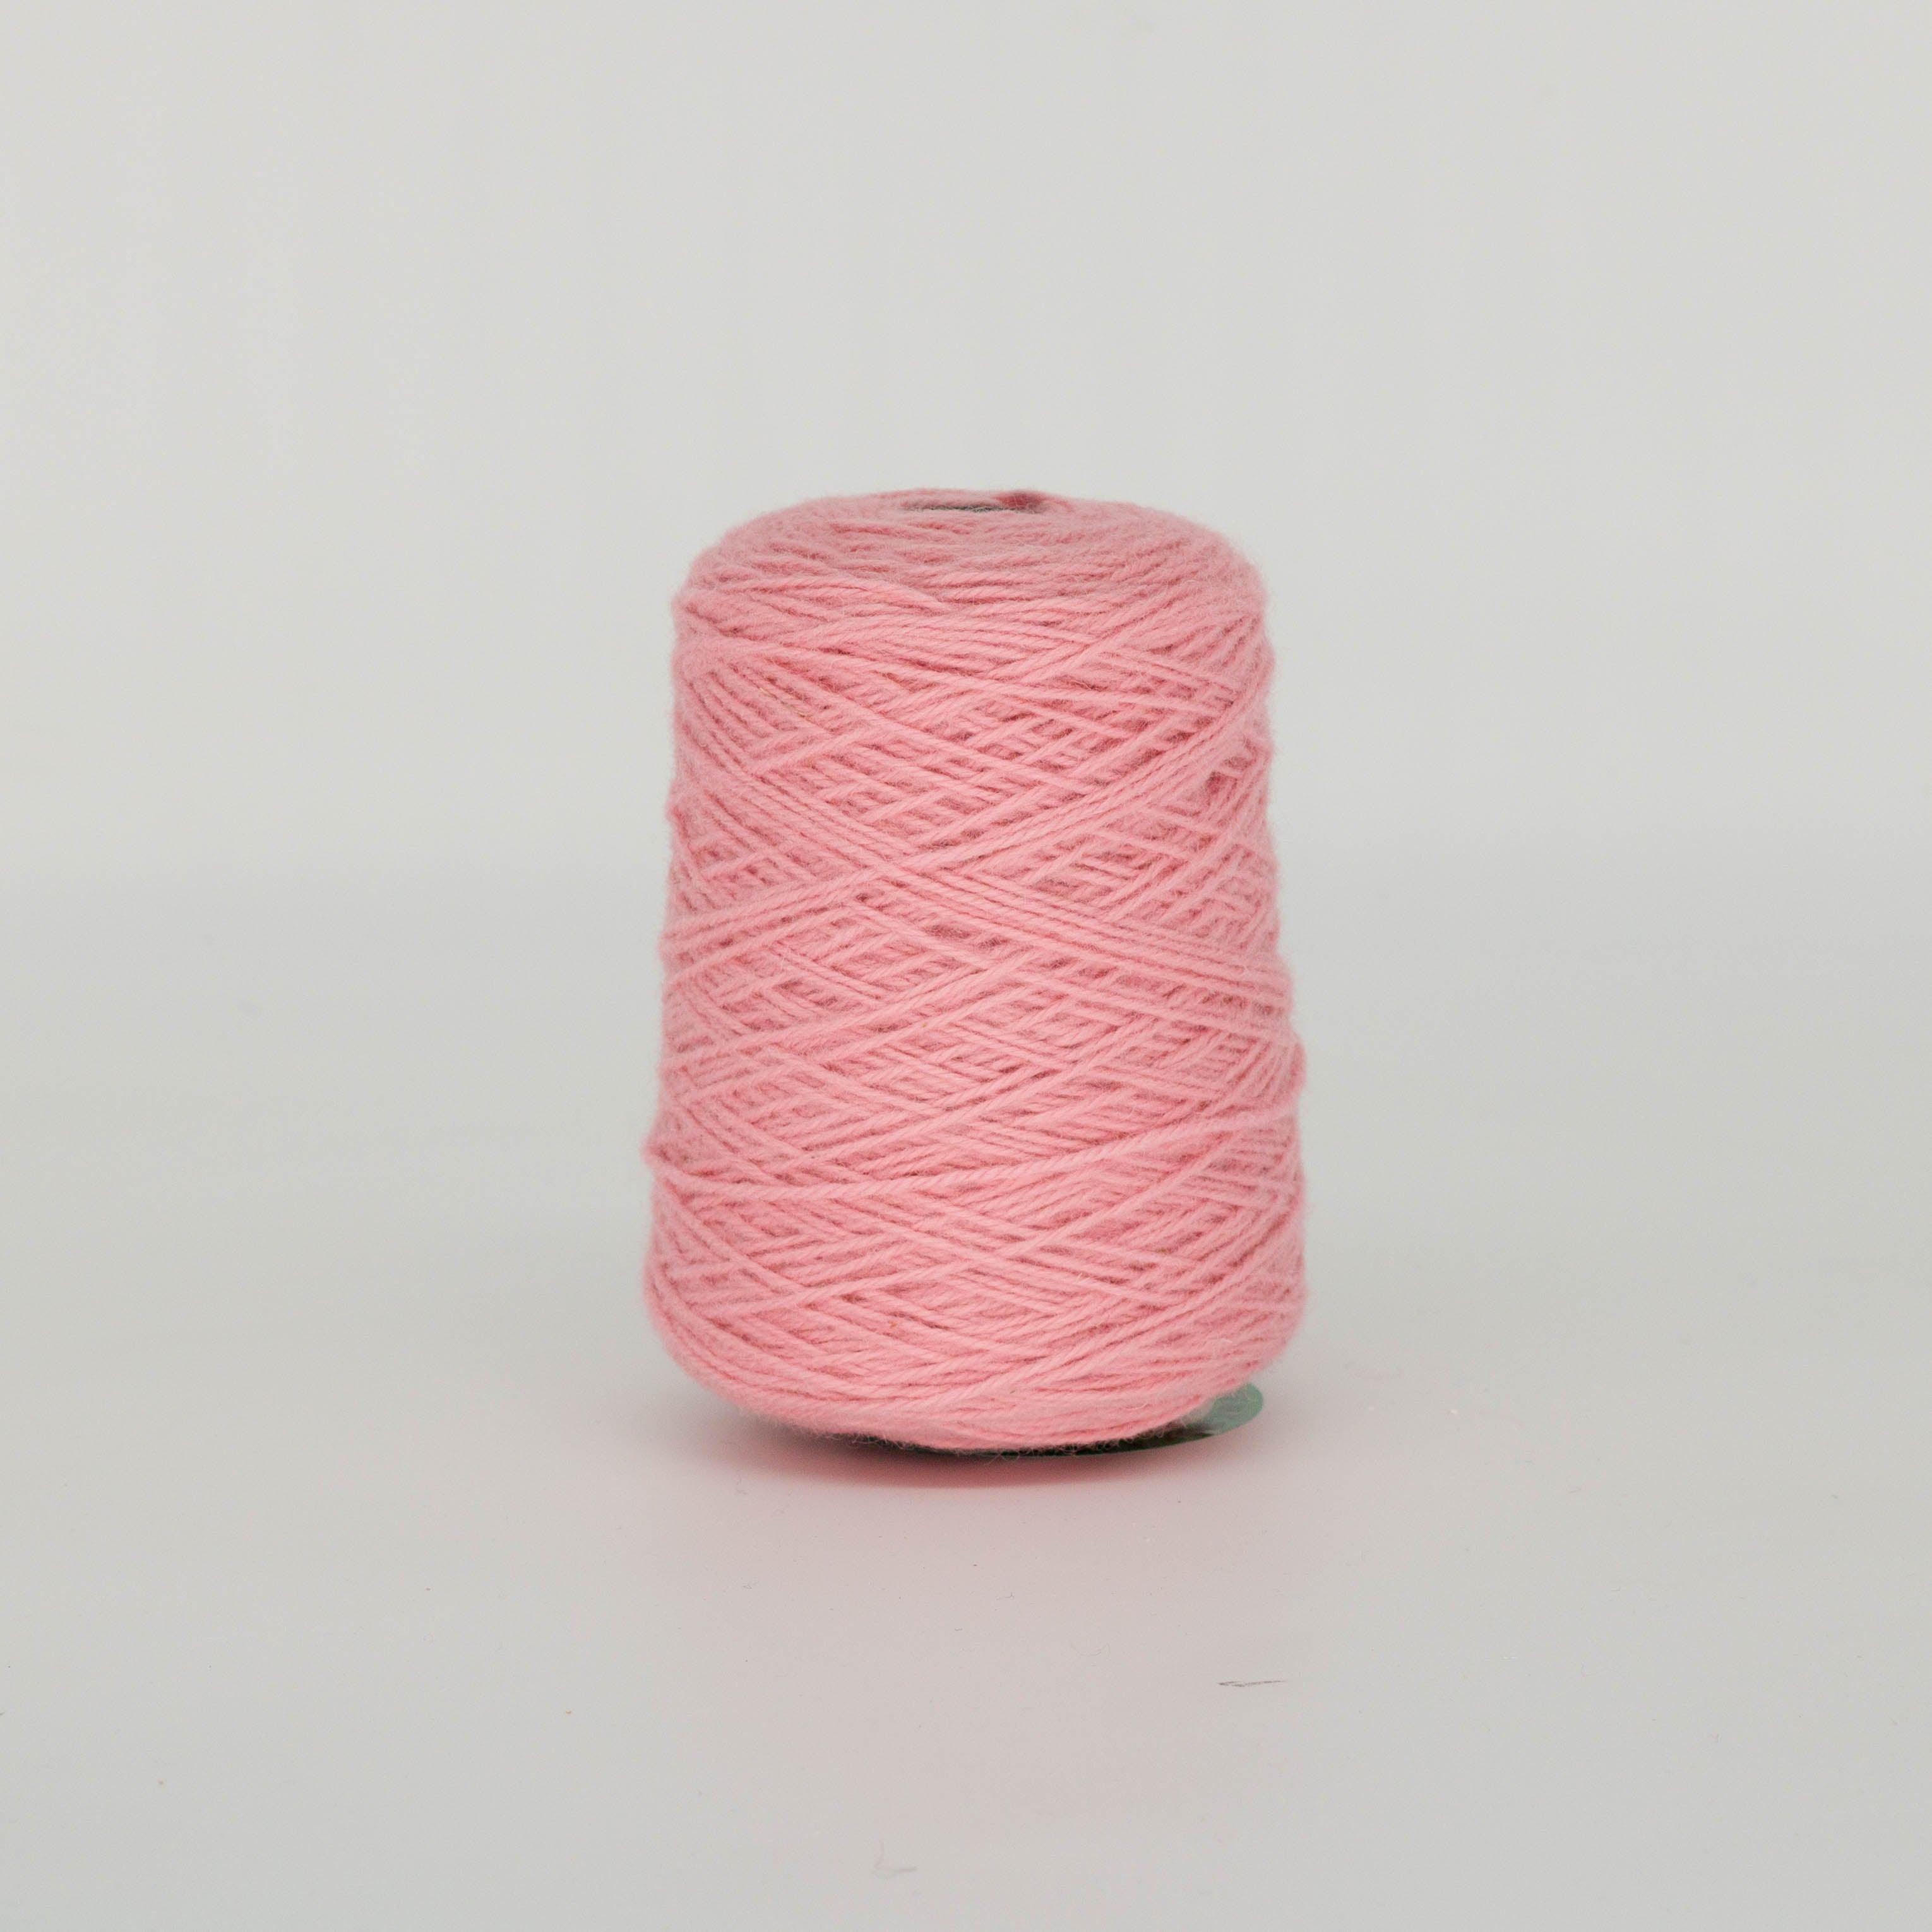 Schelp roze 100% wol tuftgaren op kegel (459)